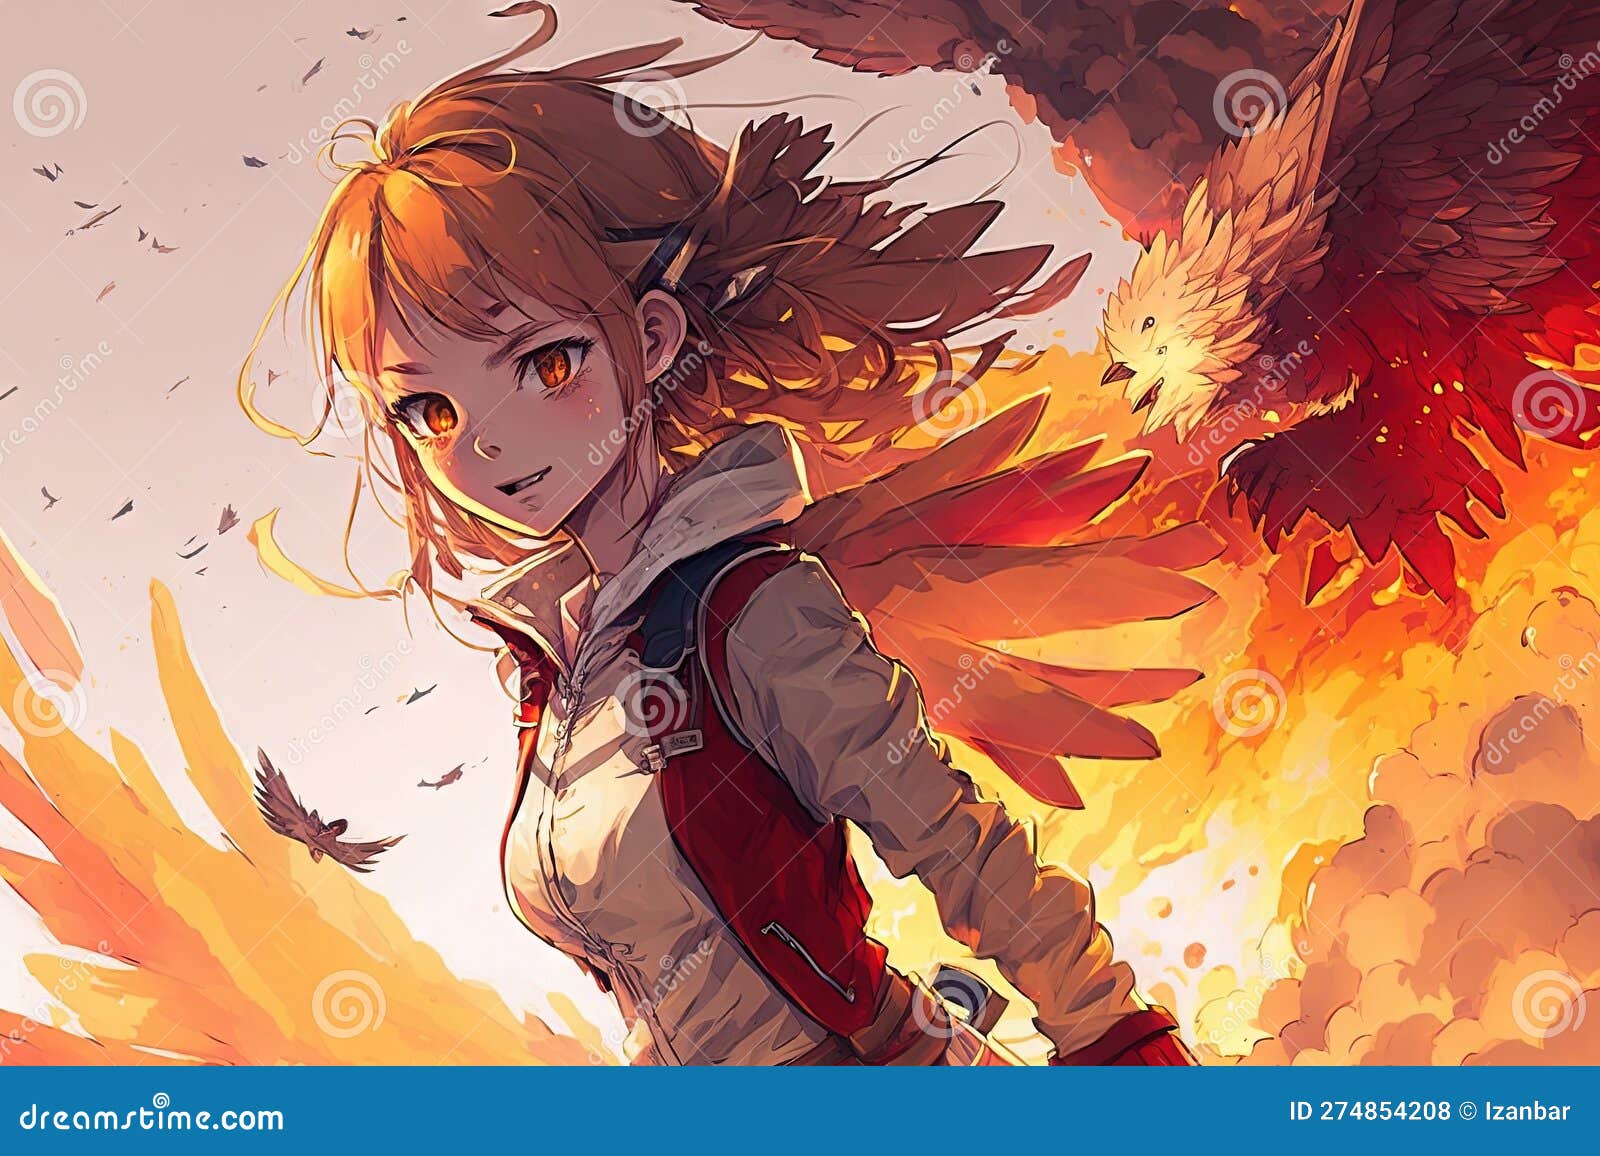 anime girl fire wings